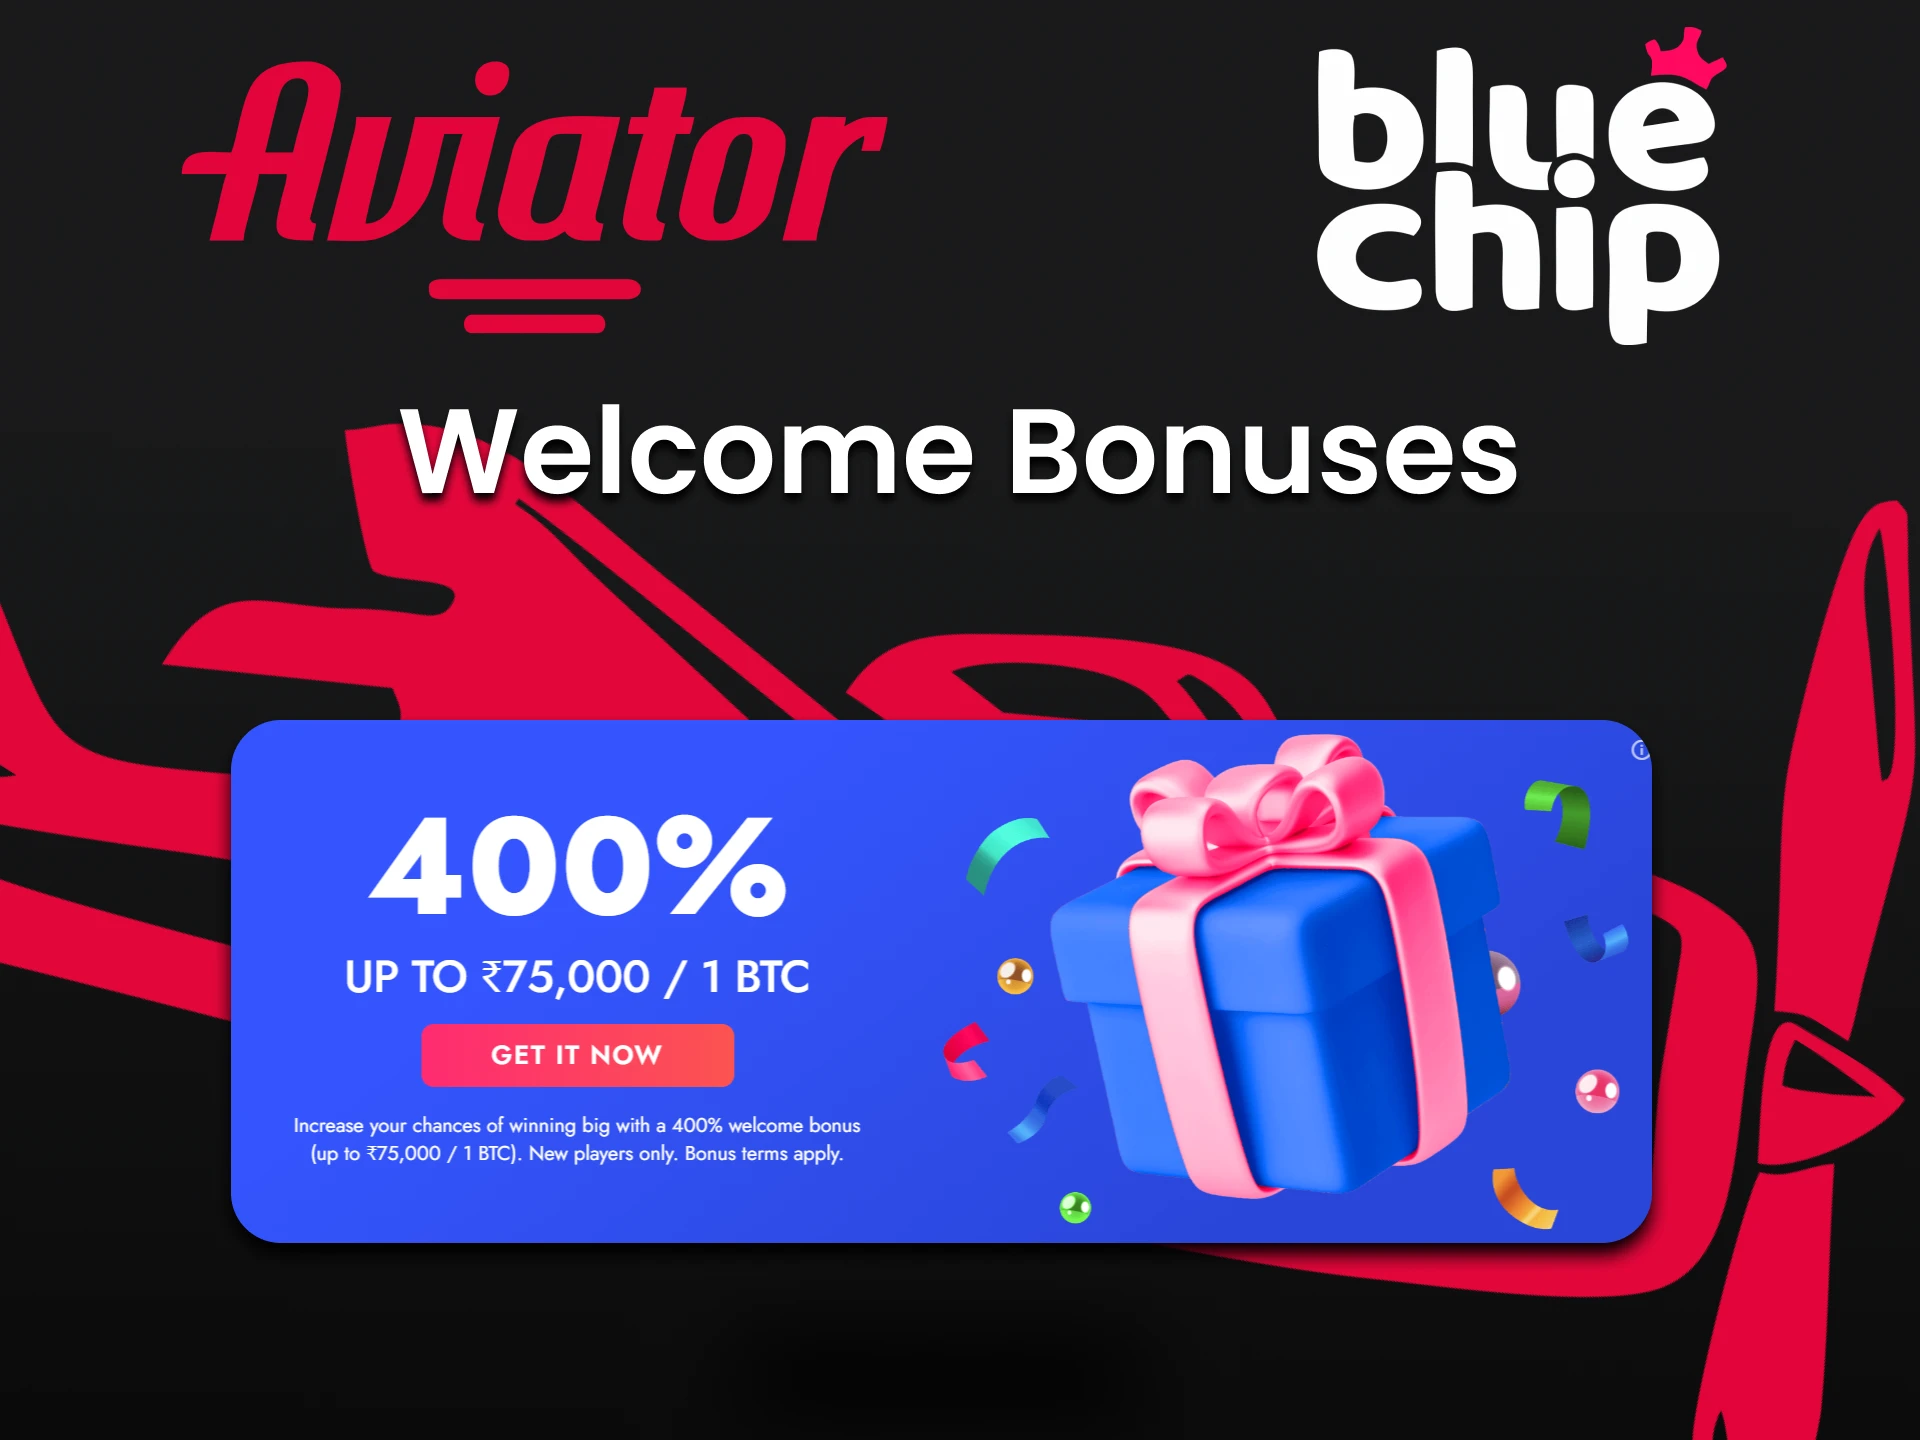 By choosing Bluechip to play Aviator you get bonuses.